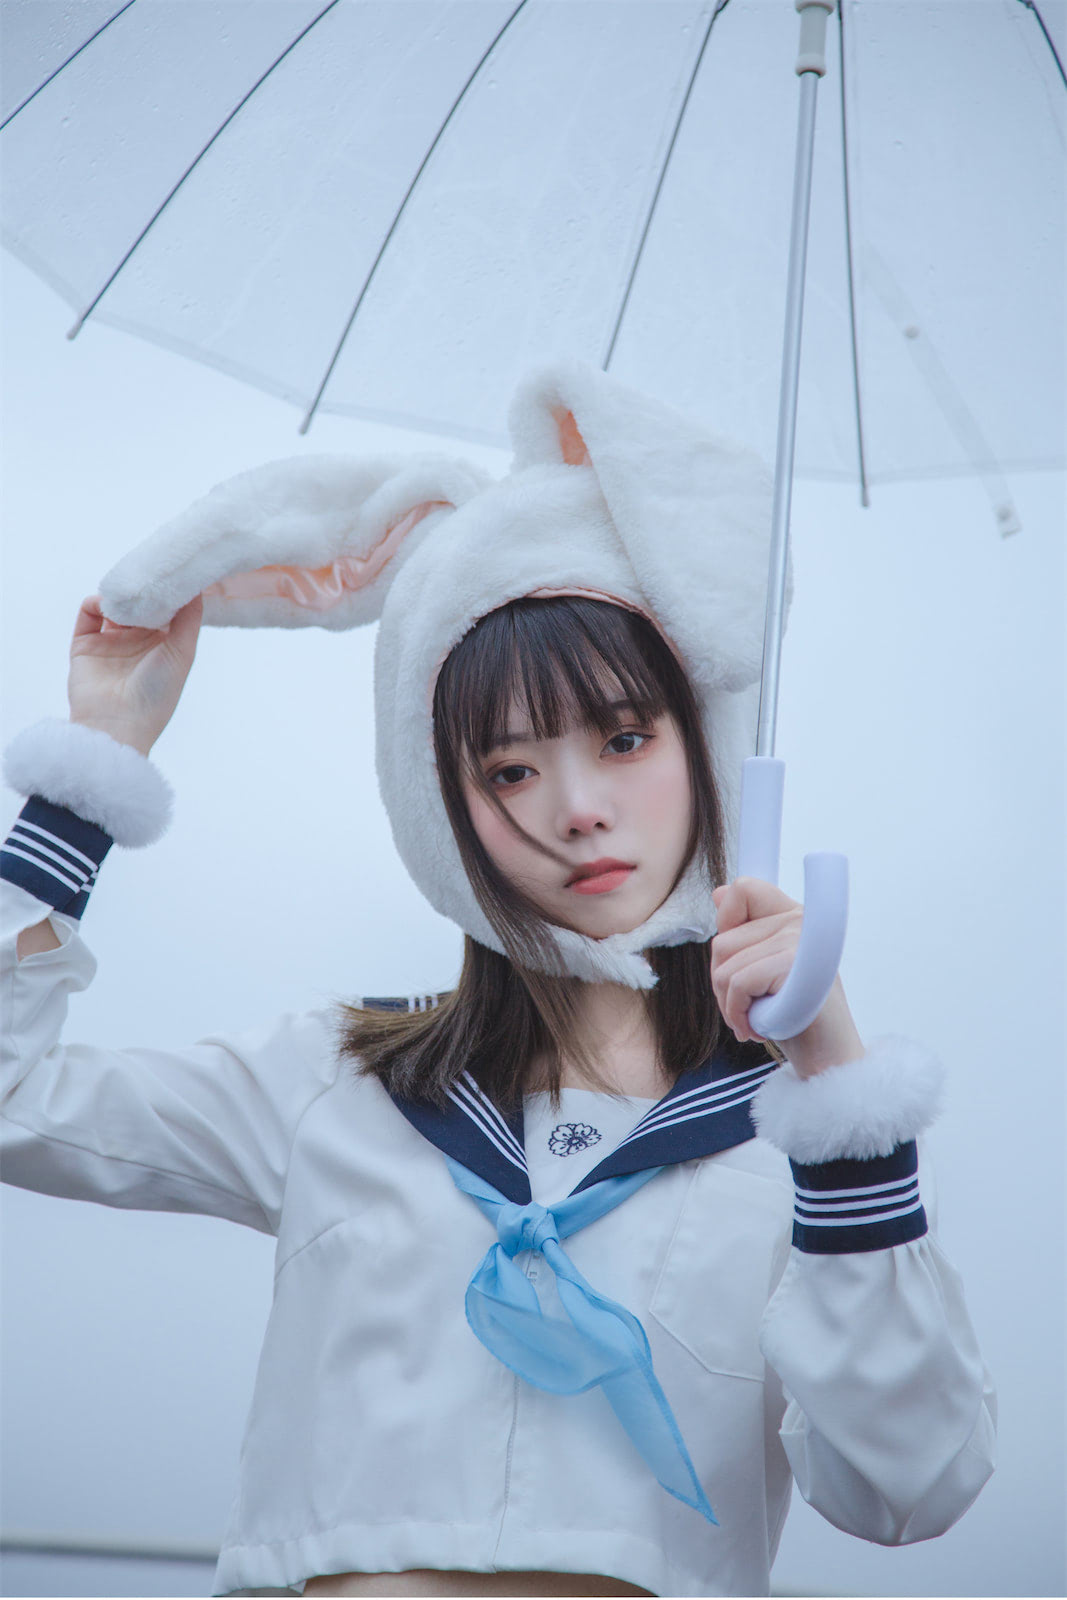 Fushii 海堂 兔兔头1